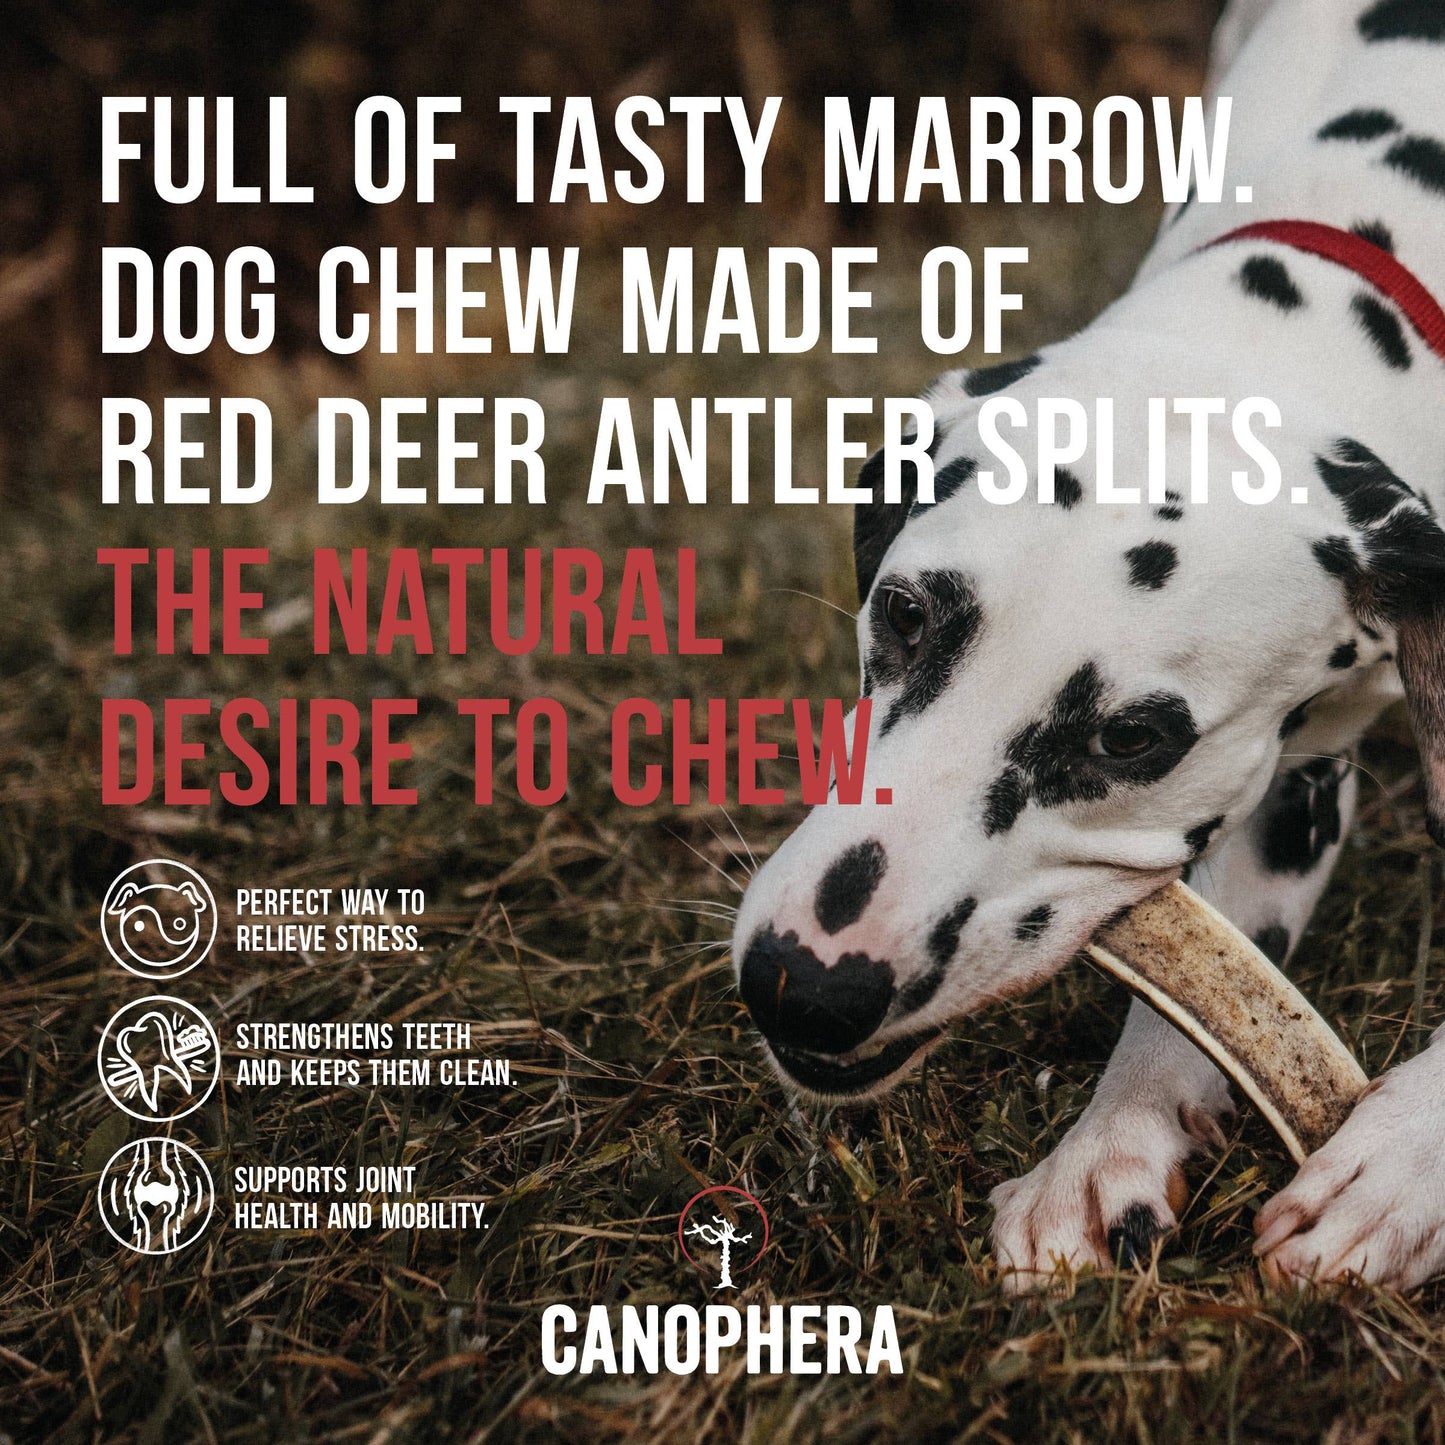 Dog Chew Made of Red Deer Antler Splits.: English / M